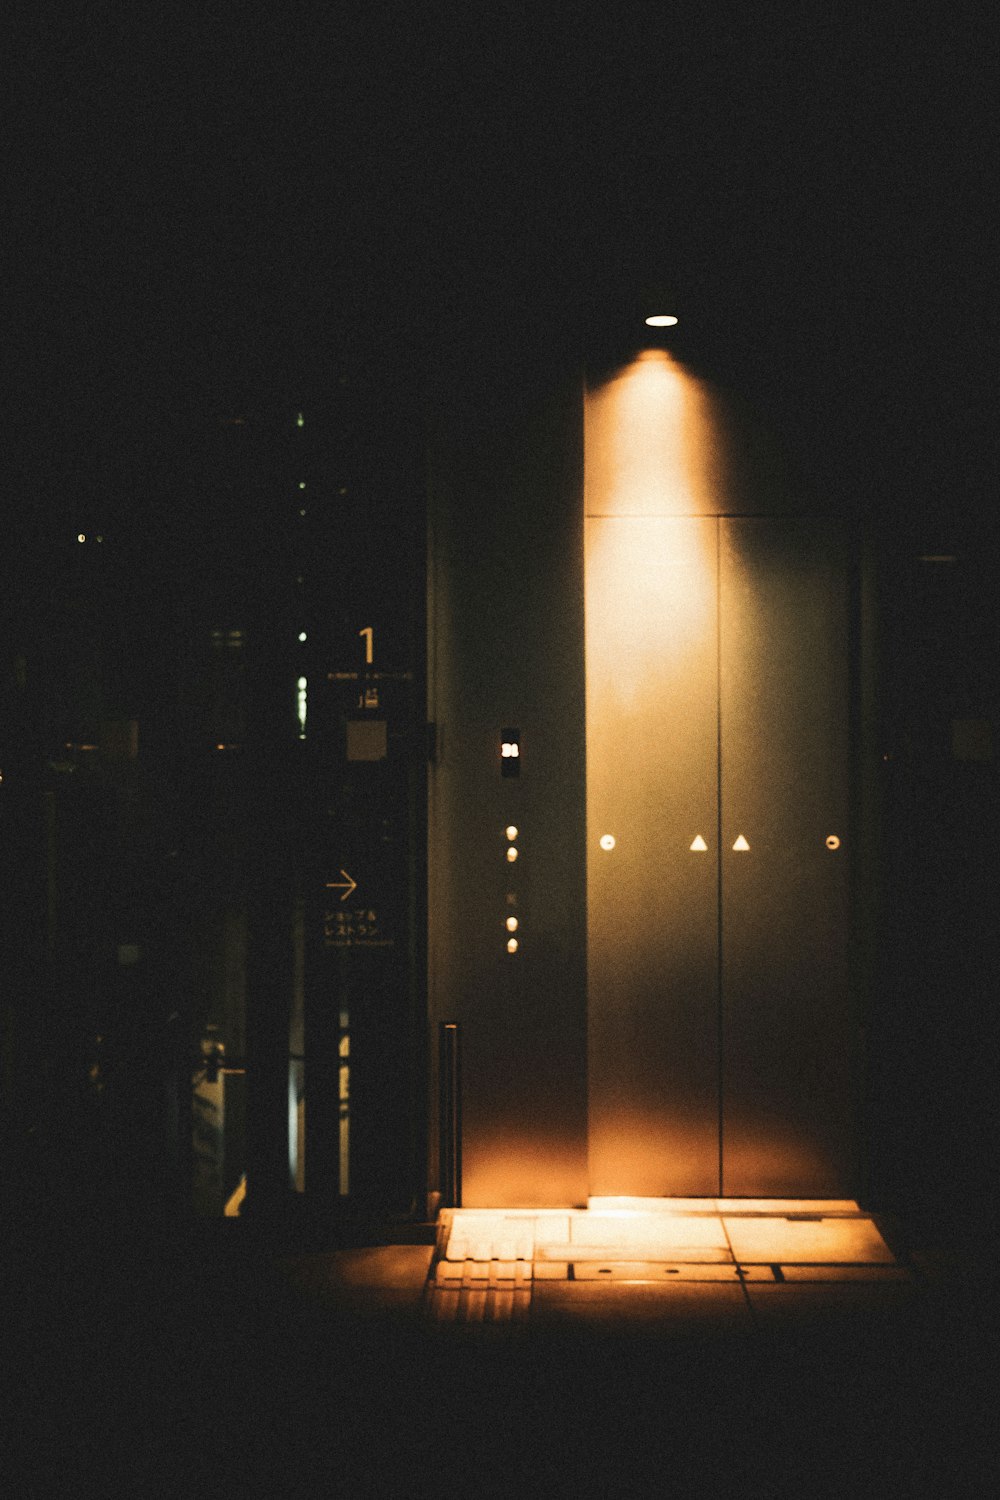 a tall pillar with lights at night